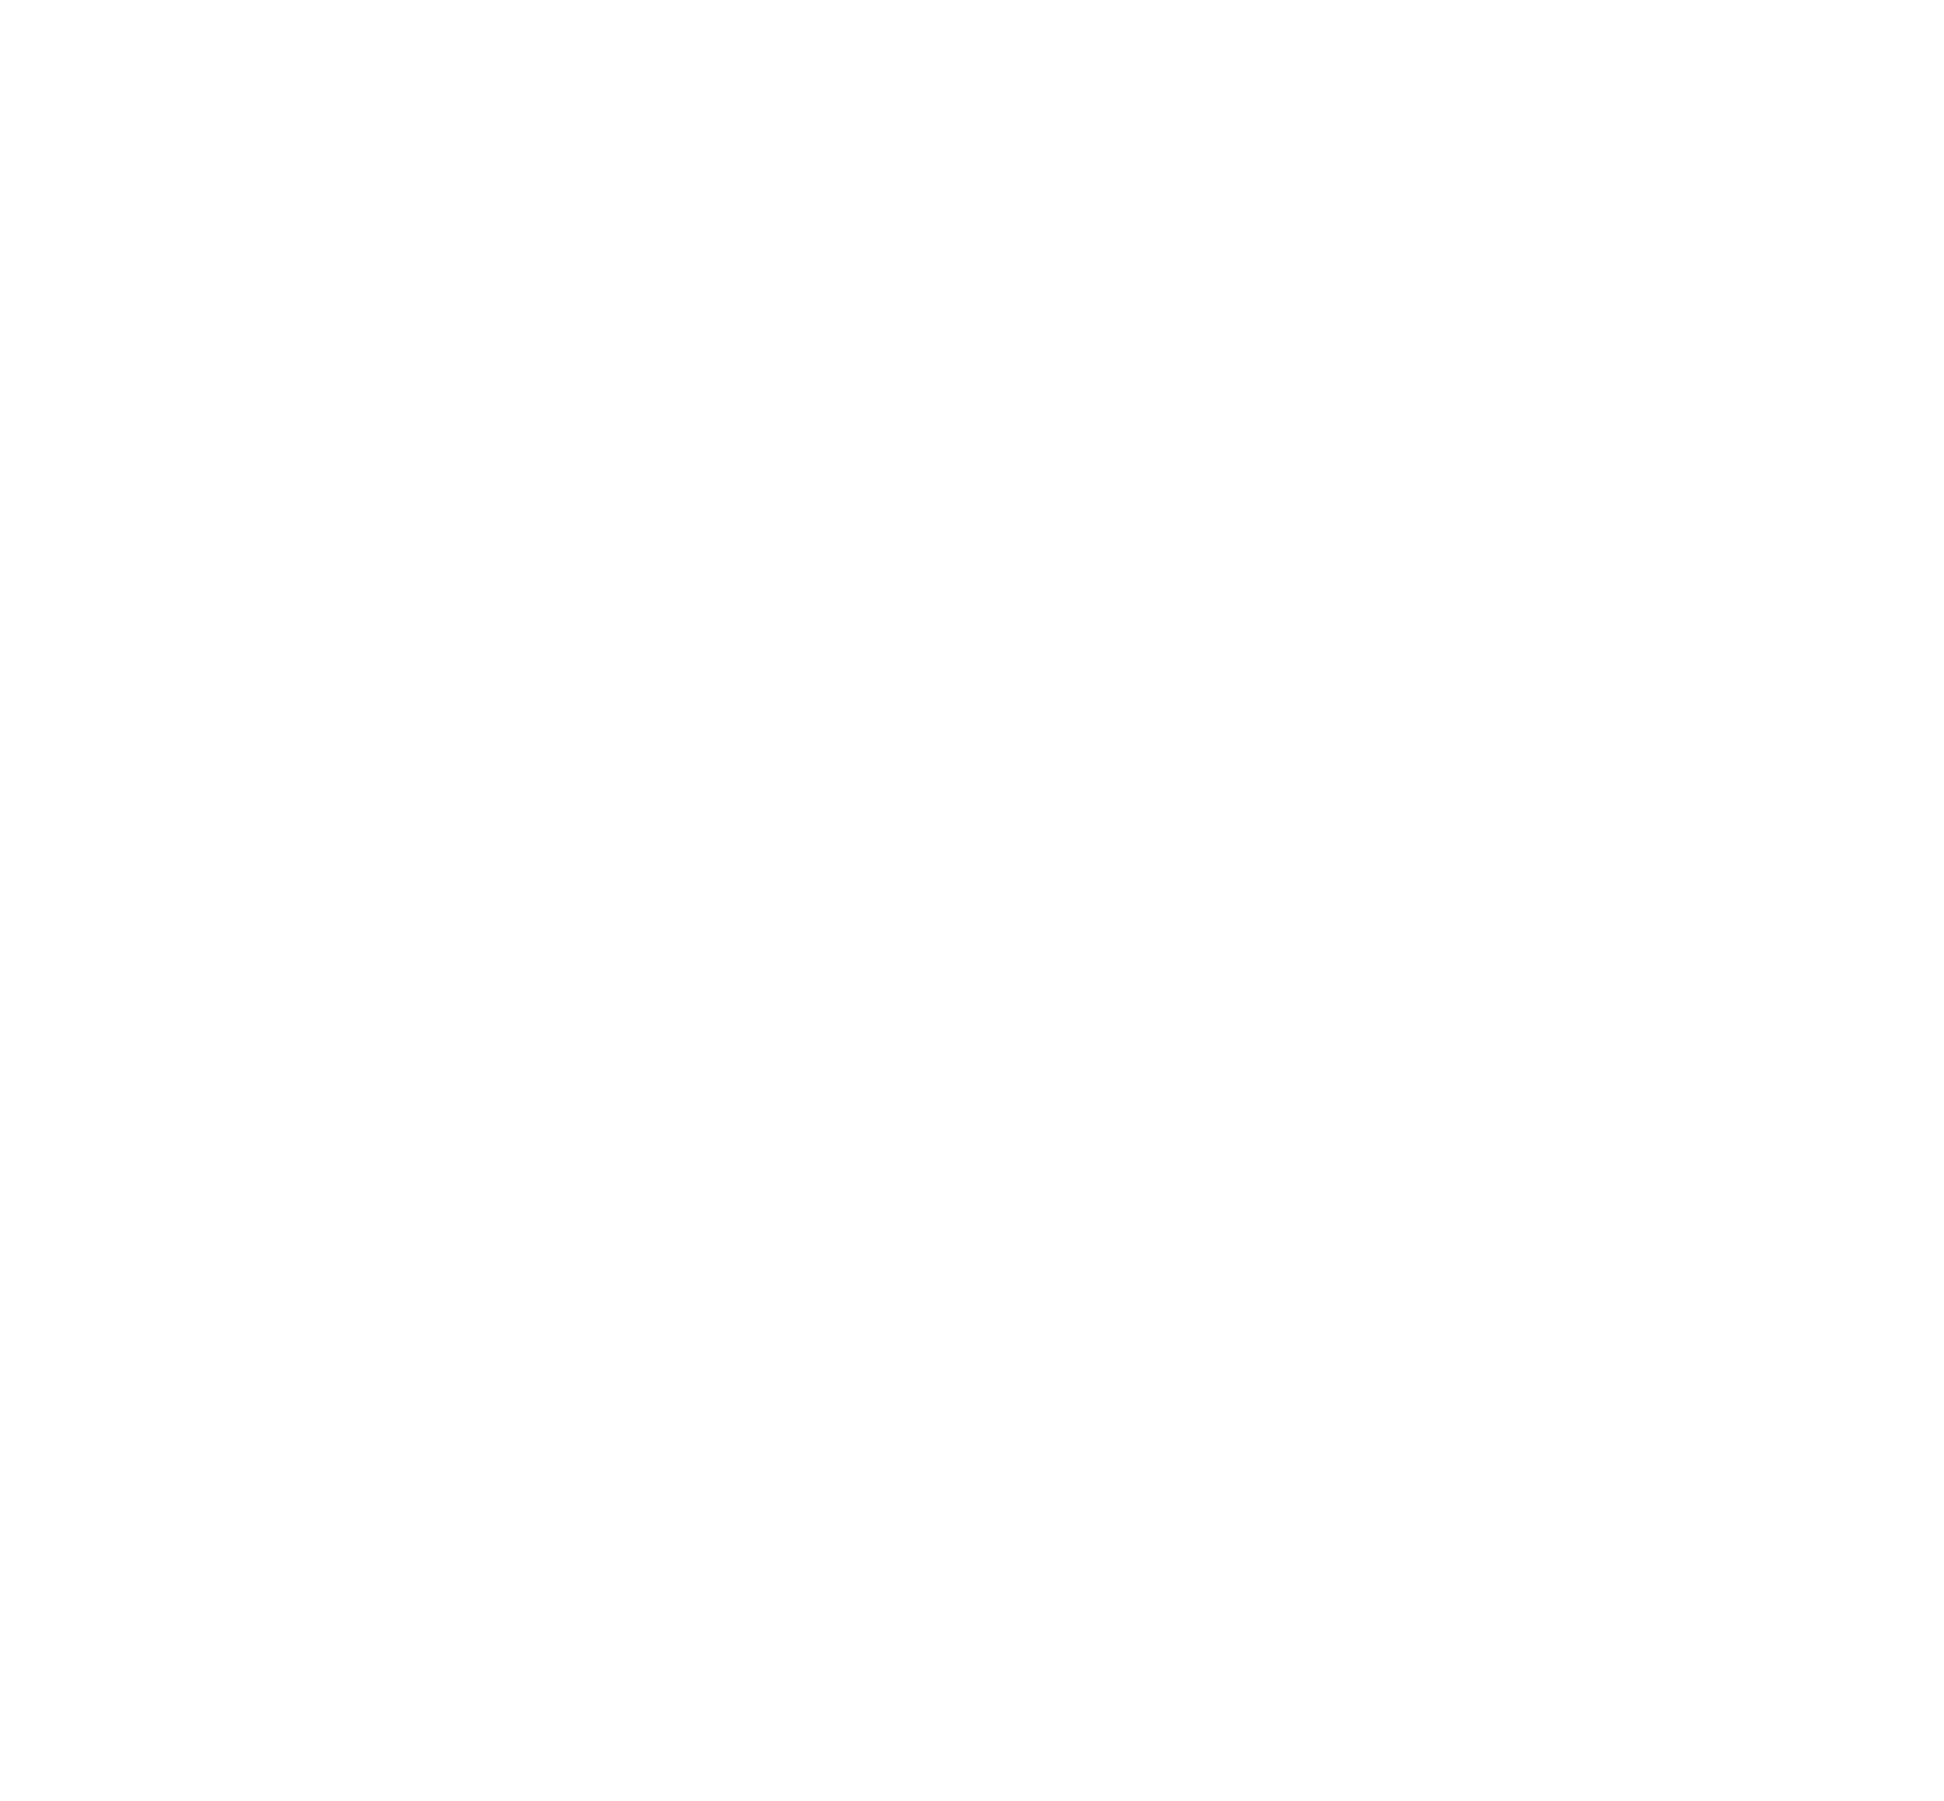 Old Dickies Logo - Home - Dickies Arena